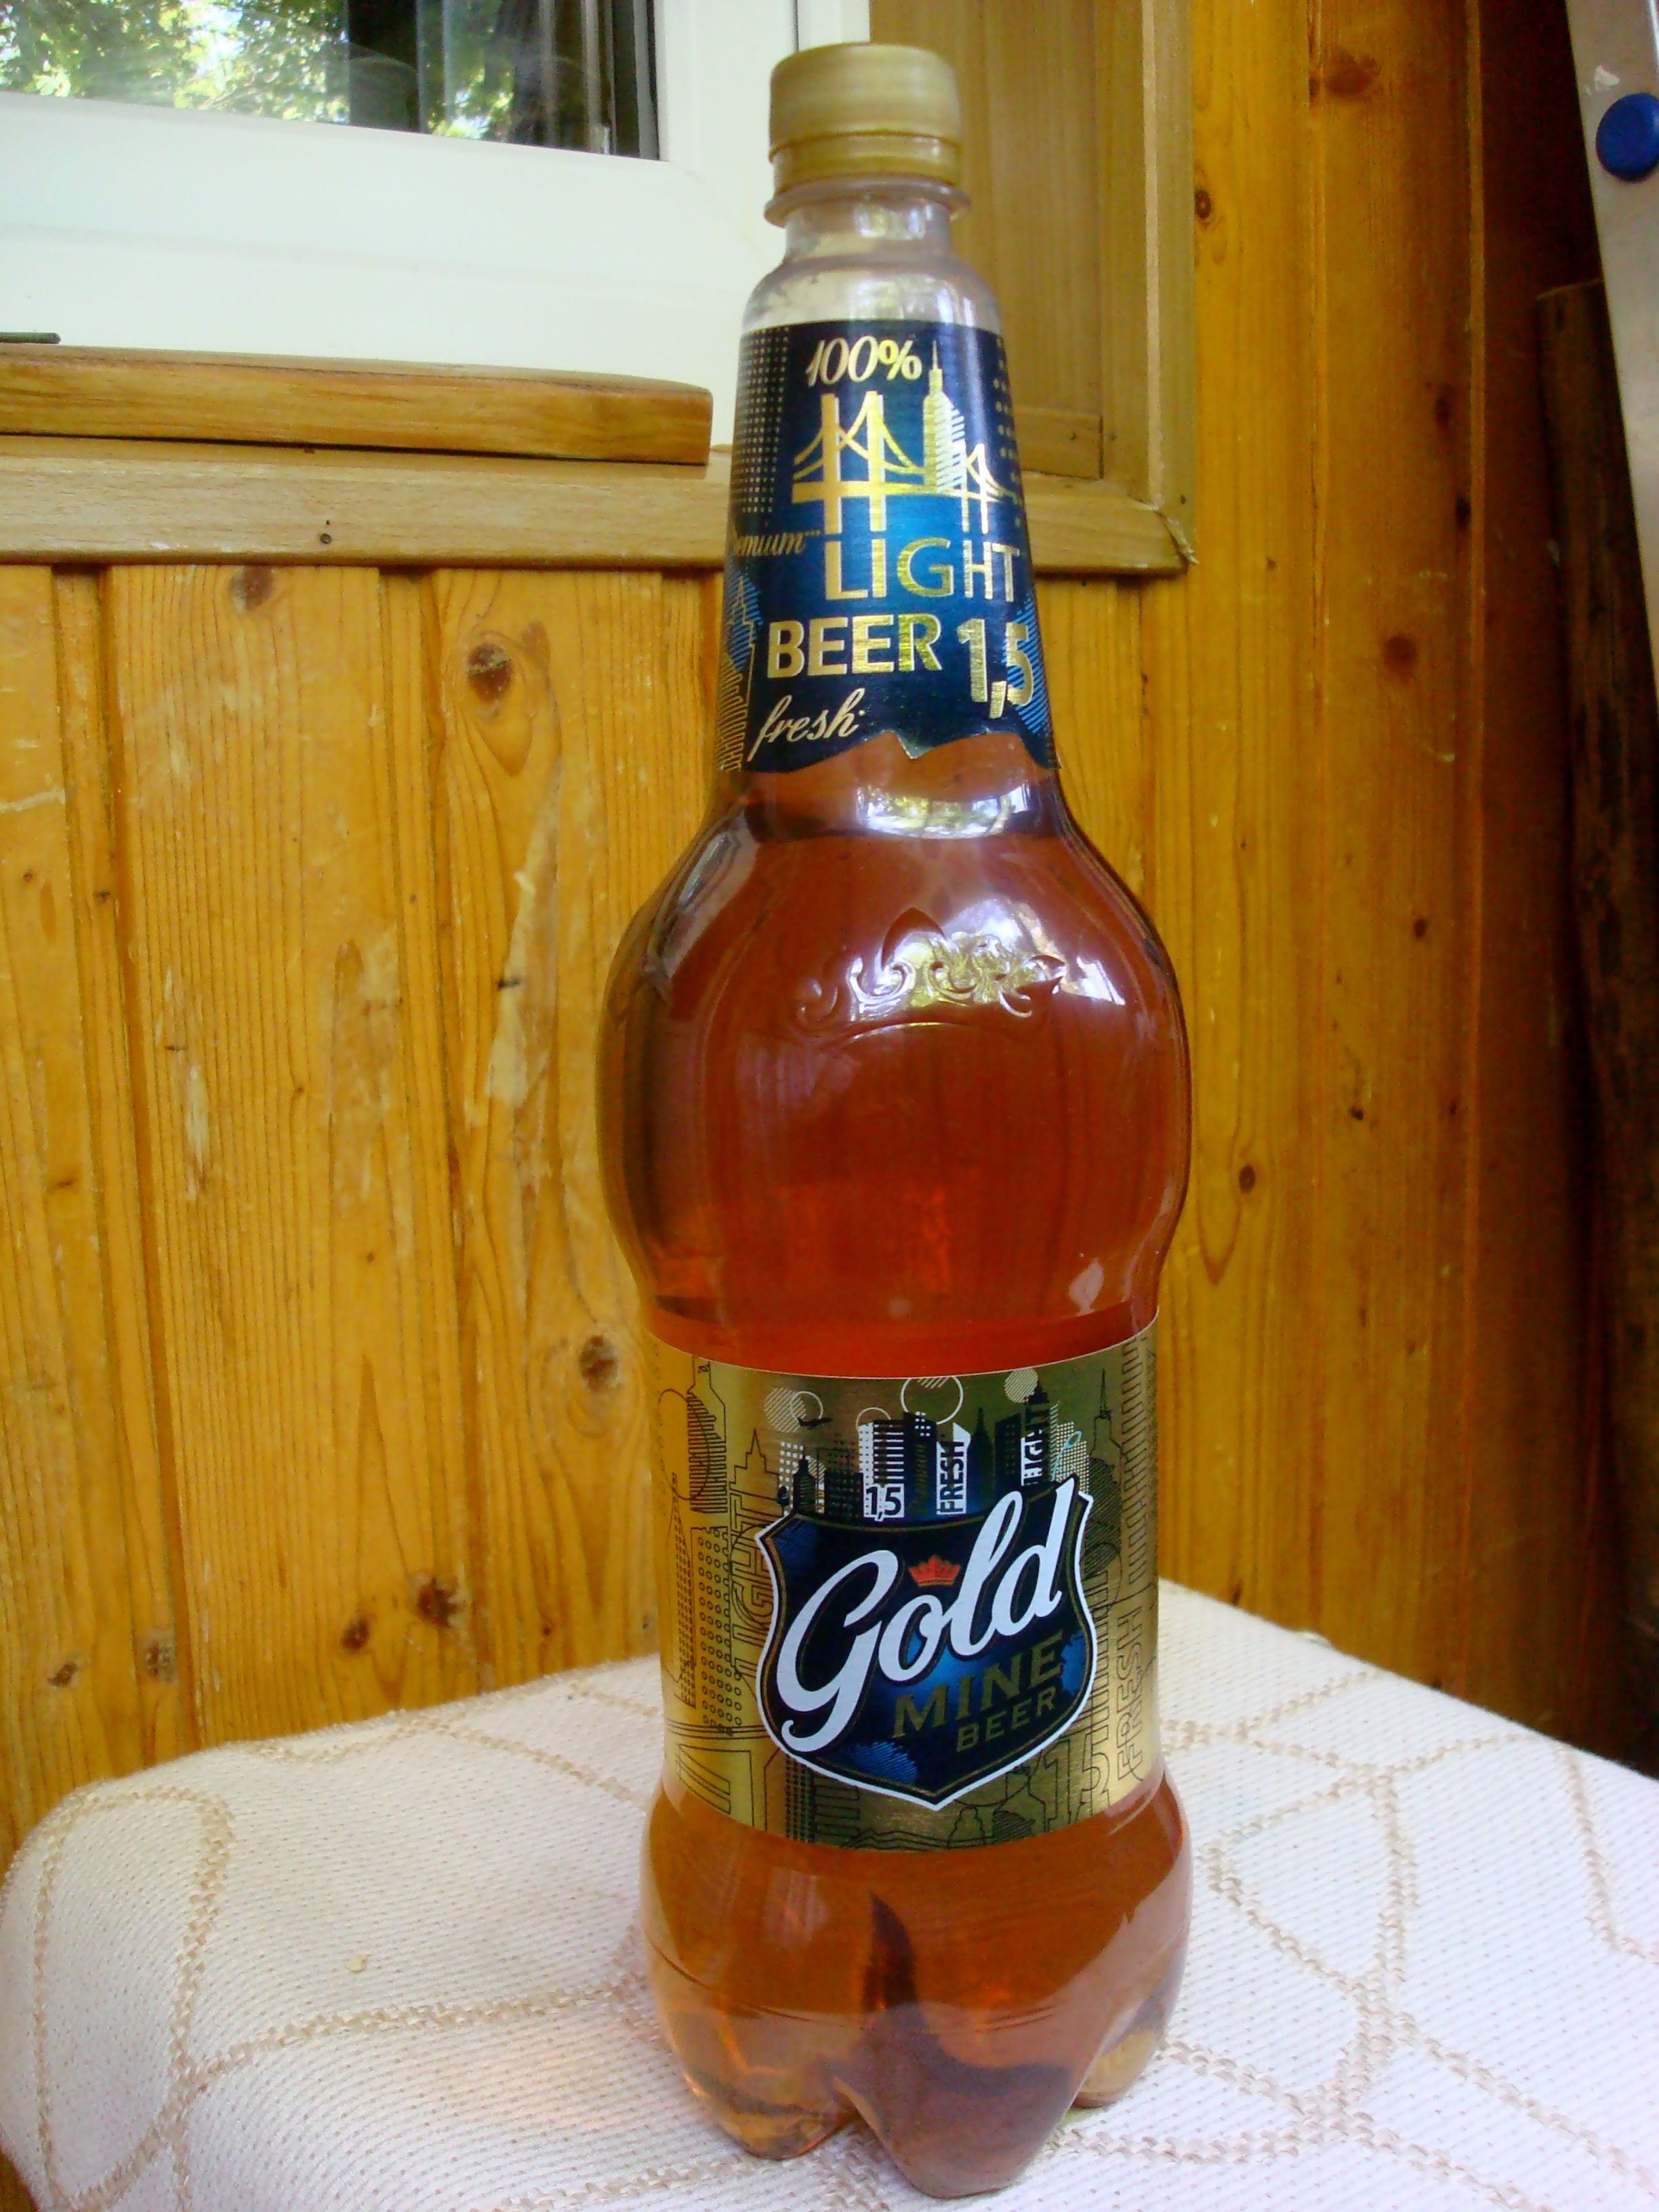 Gold beer. Пиво Gold mine Beer ячменное. Пиво Голд майн 1.3. Пиво Голд бир 1.5 крепость. Gold mine пиво 1.5.